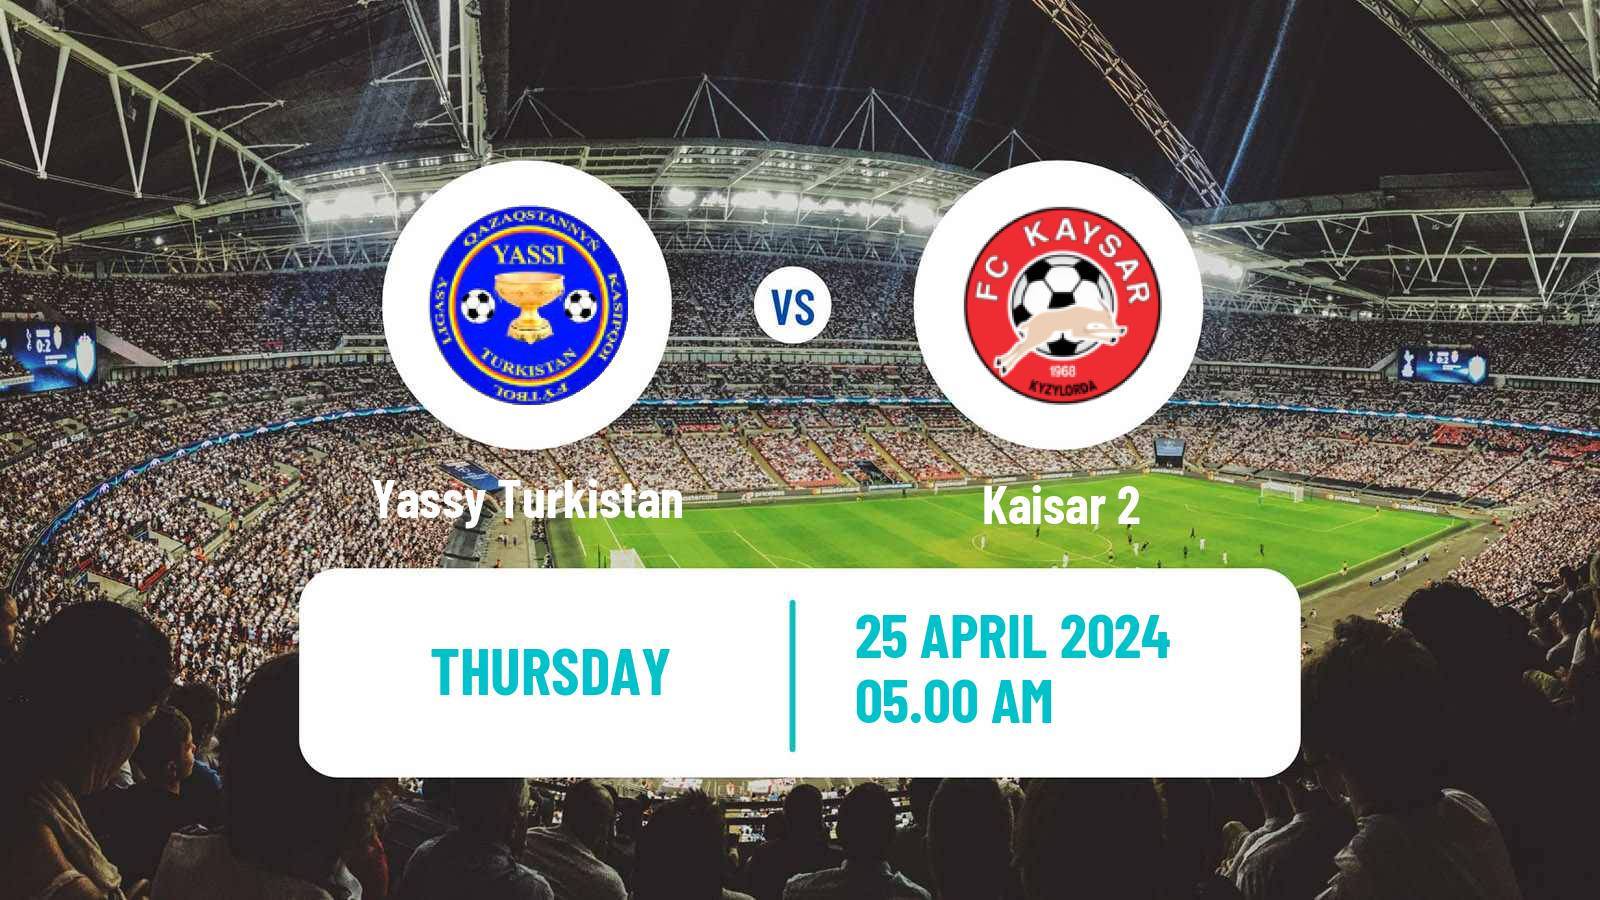 Soccer Kazakh First Division Yassy Turkistan - Kaisar 2